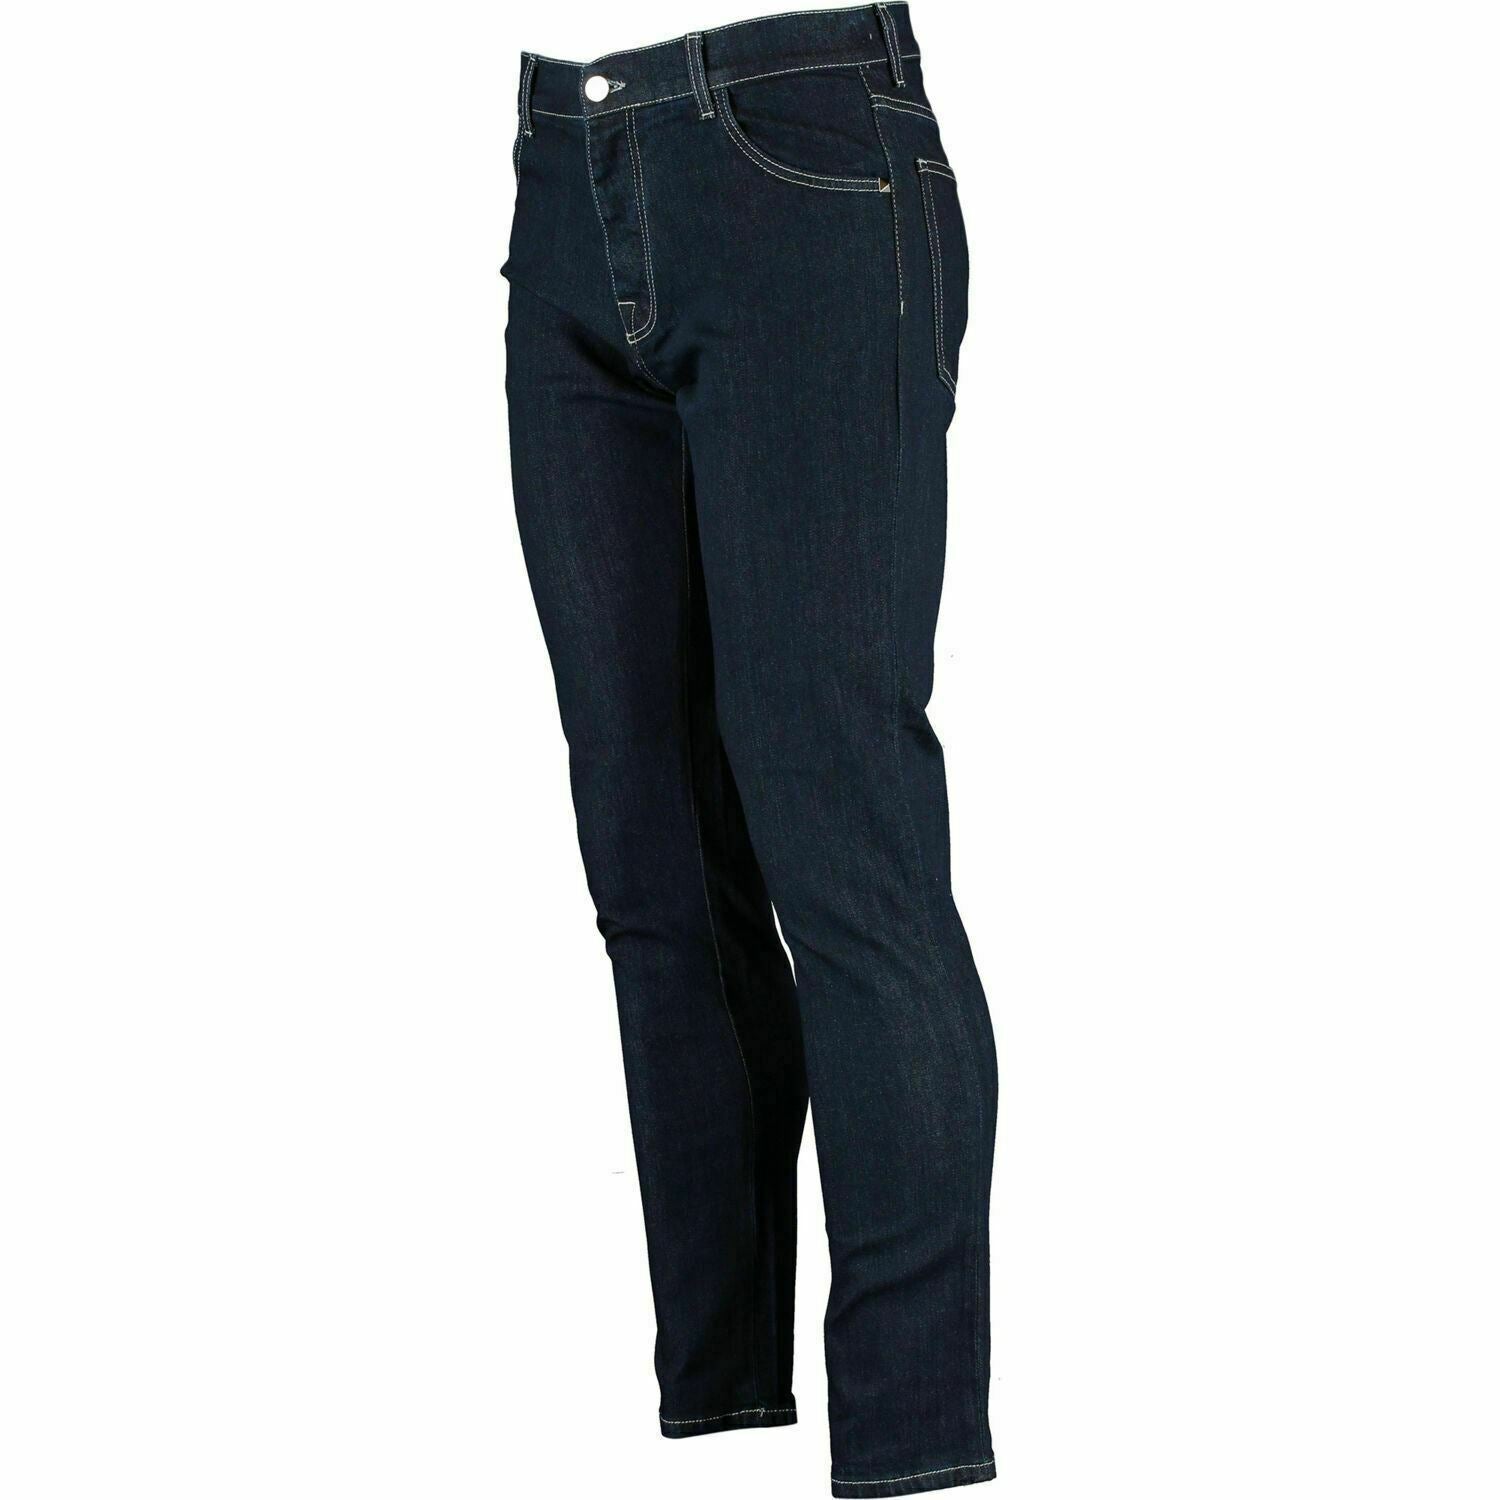 CASTELBAJAC Paris - Men's Dark Blue Modern Fit Jeans, size W36